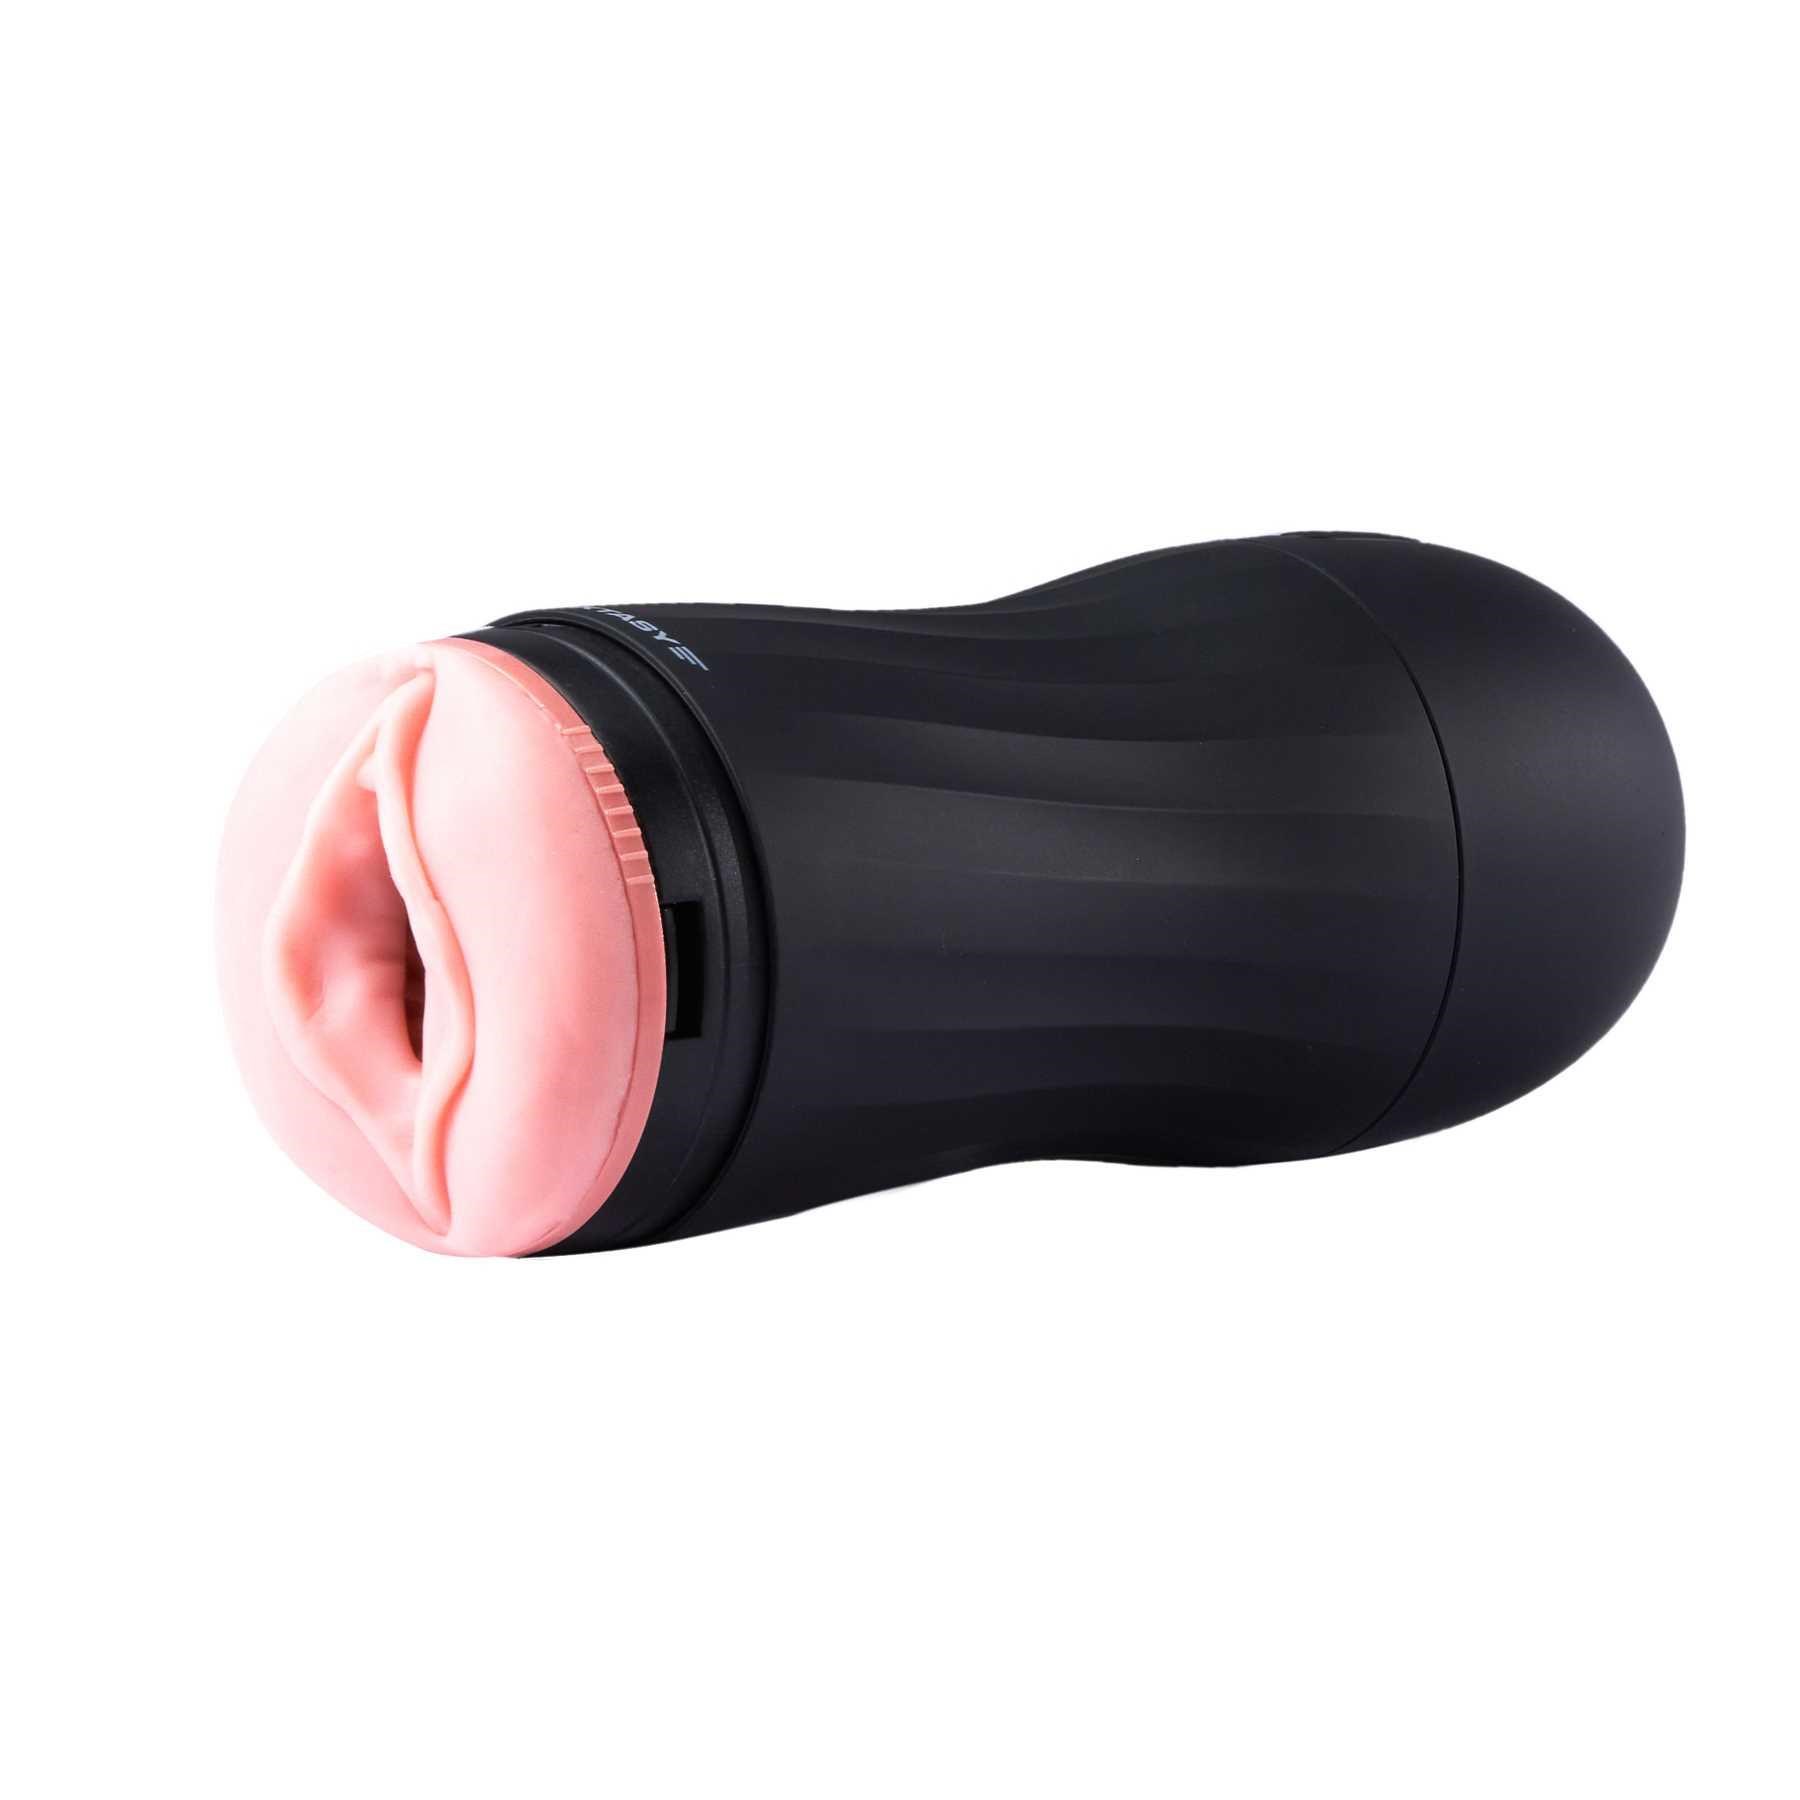 Maxtasy Stroke Master Stroker - Realistic Pink Vagina side view